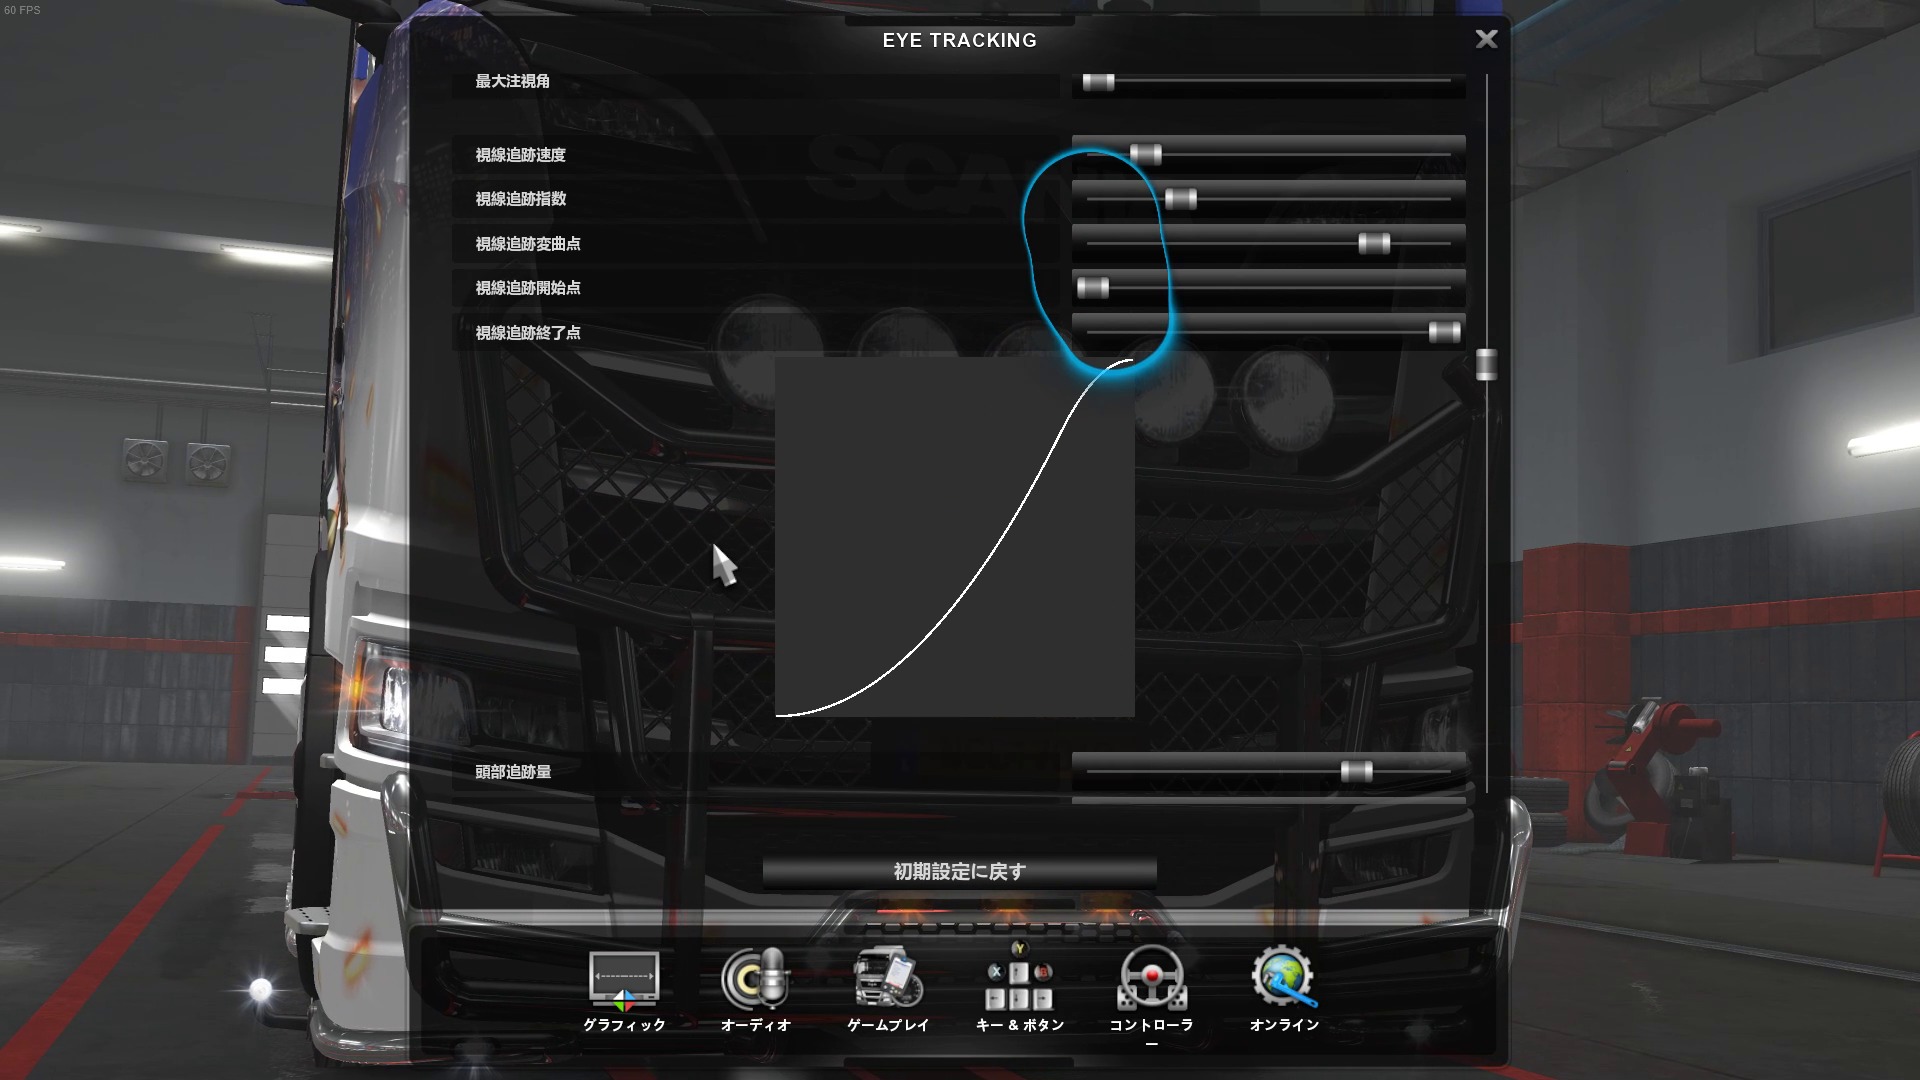 Tobii Eye Tracker 4c レビュー 5 Euro Truck Simulator 2 Ets2 編